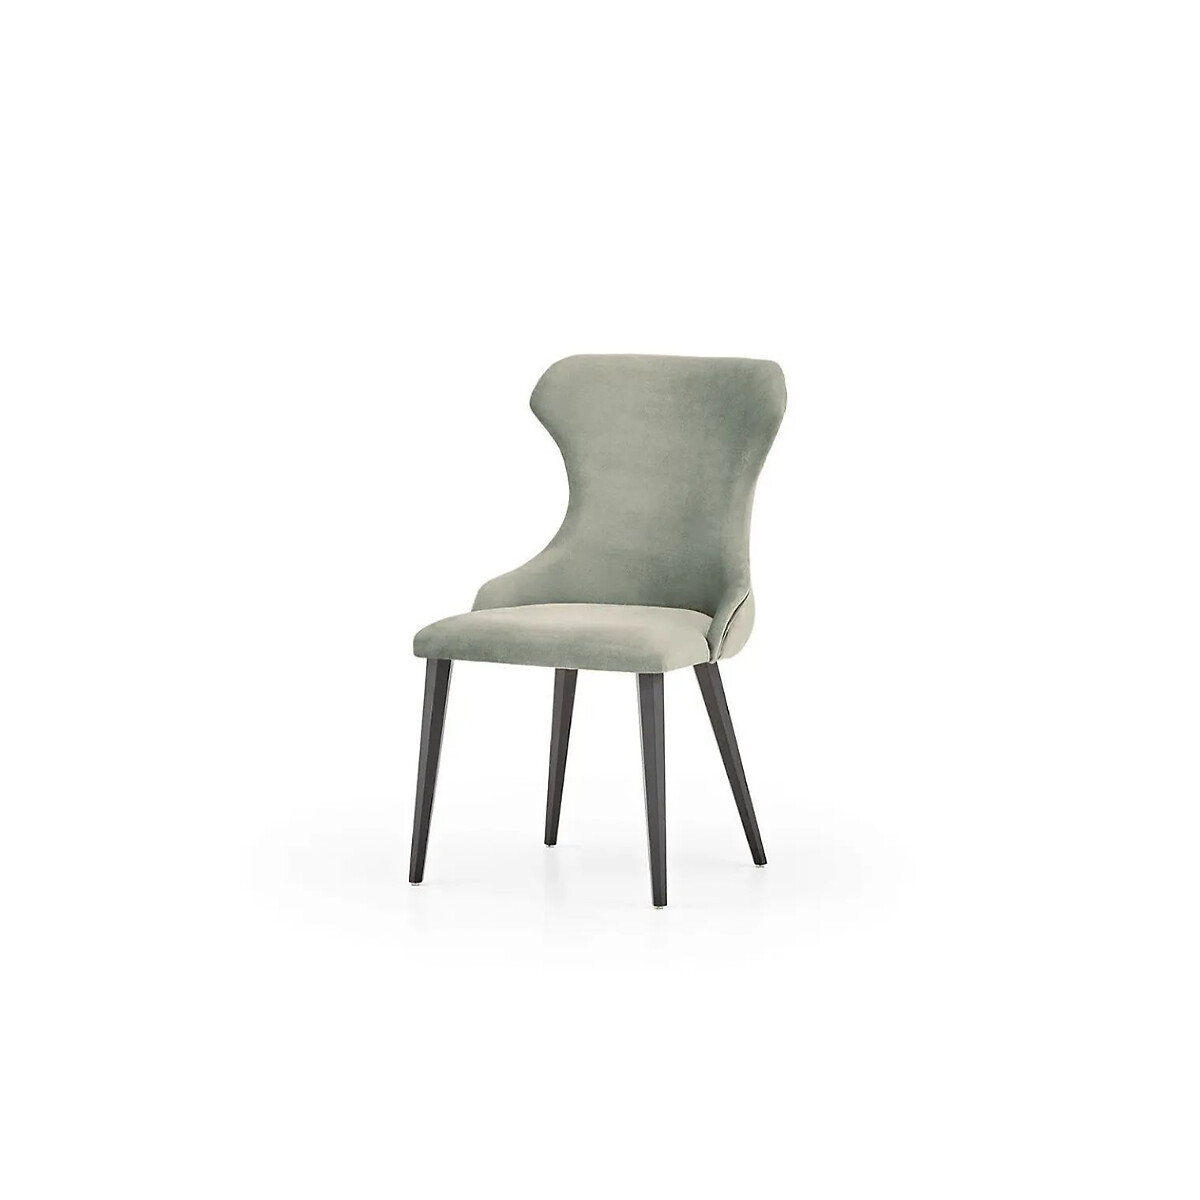 Стул Lorenta единый размер серый стул с фланелевым покрытием tibby единый размер серый